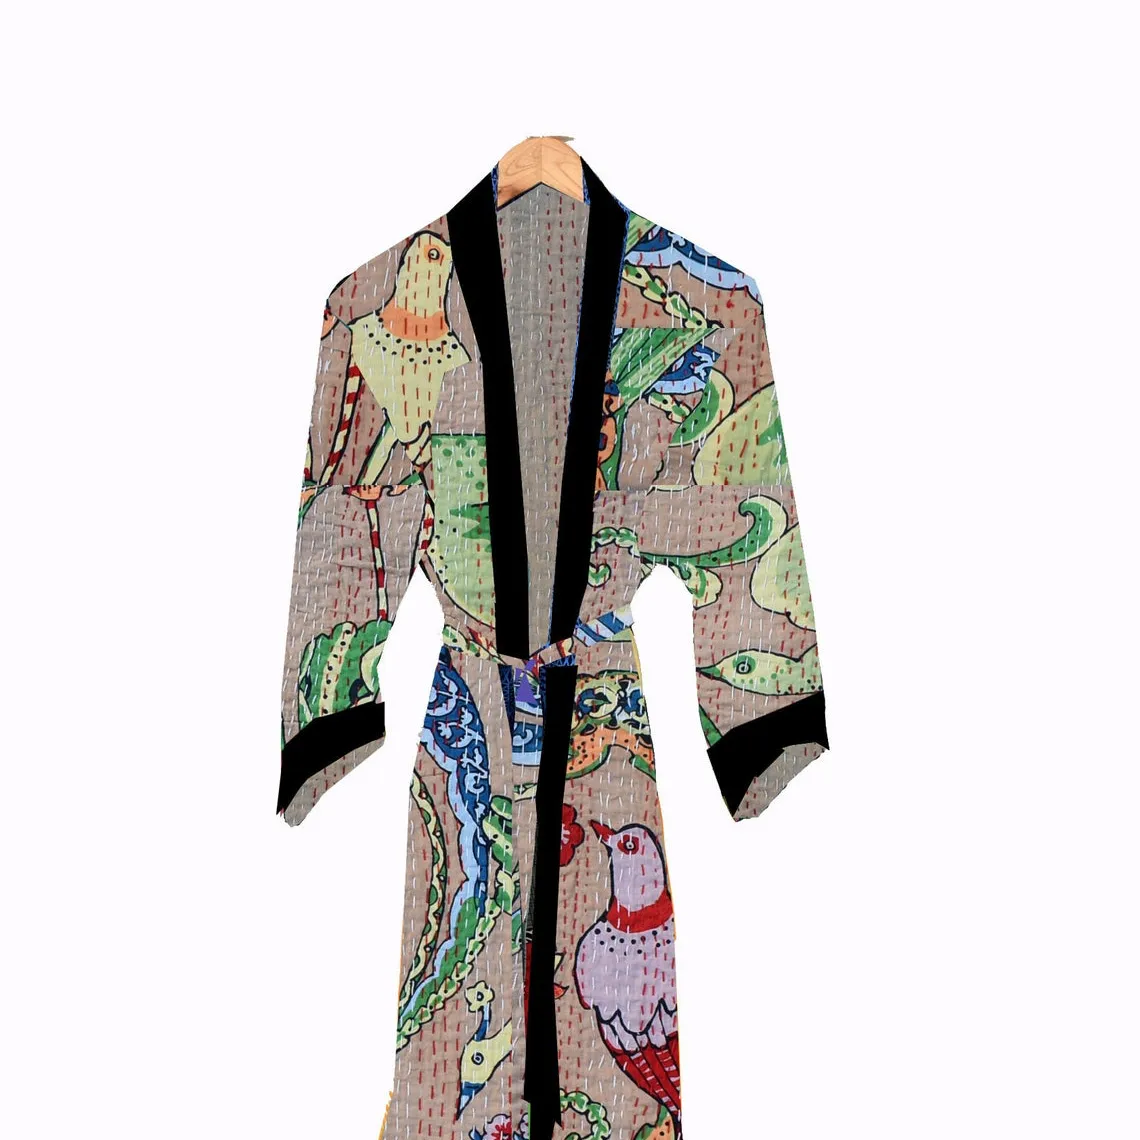 निर्माता और थोक महिलाओं के किमोनो कपास किमोनो समुद्र तट बाथरोब पोशाक